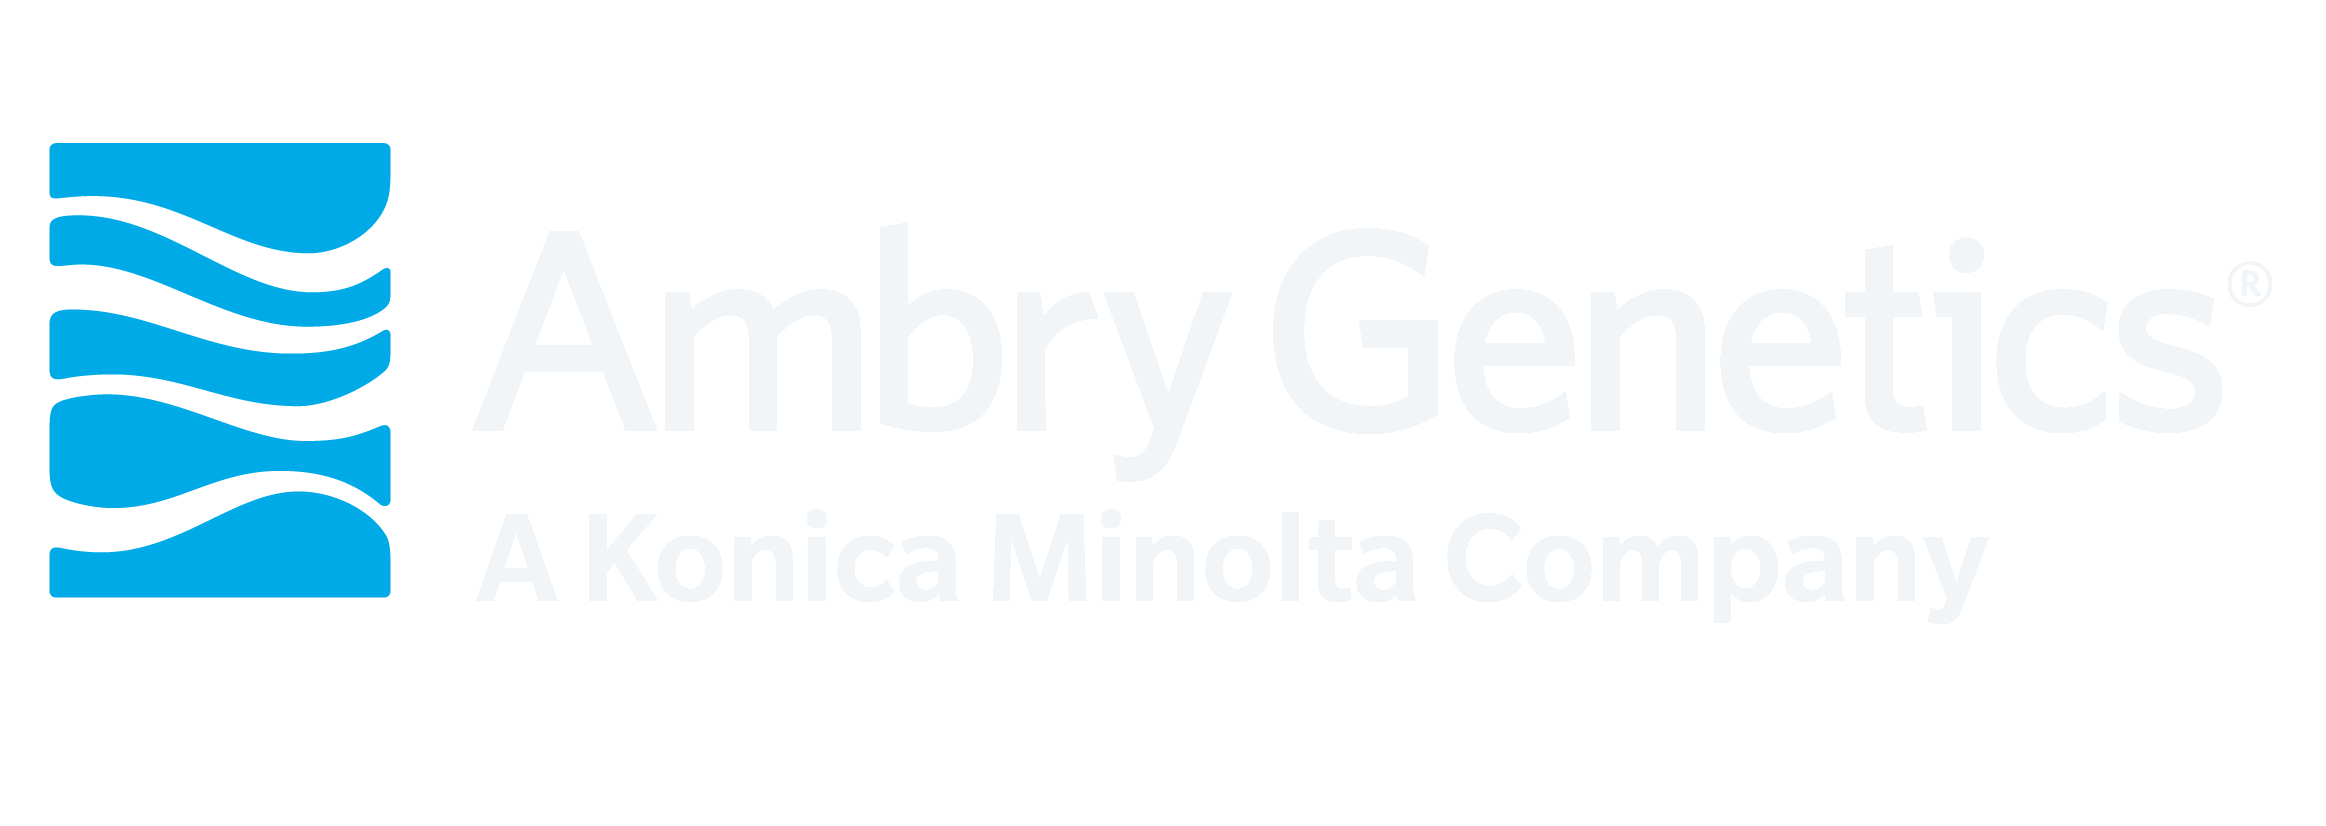 Ambry Genetics Logo